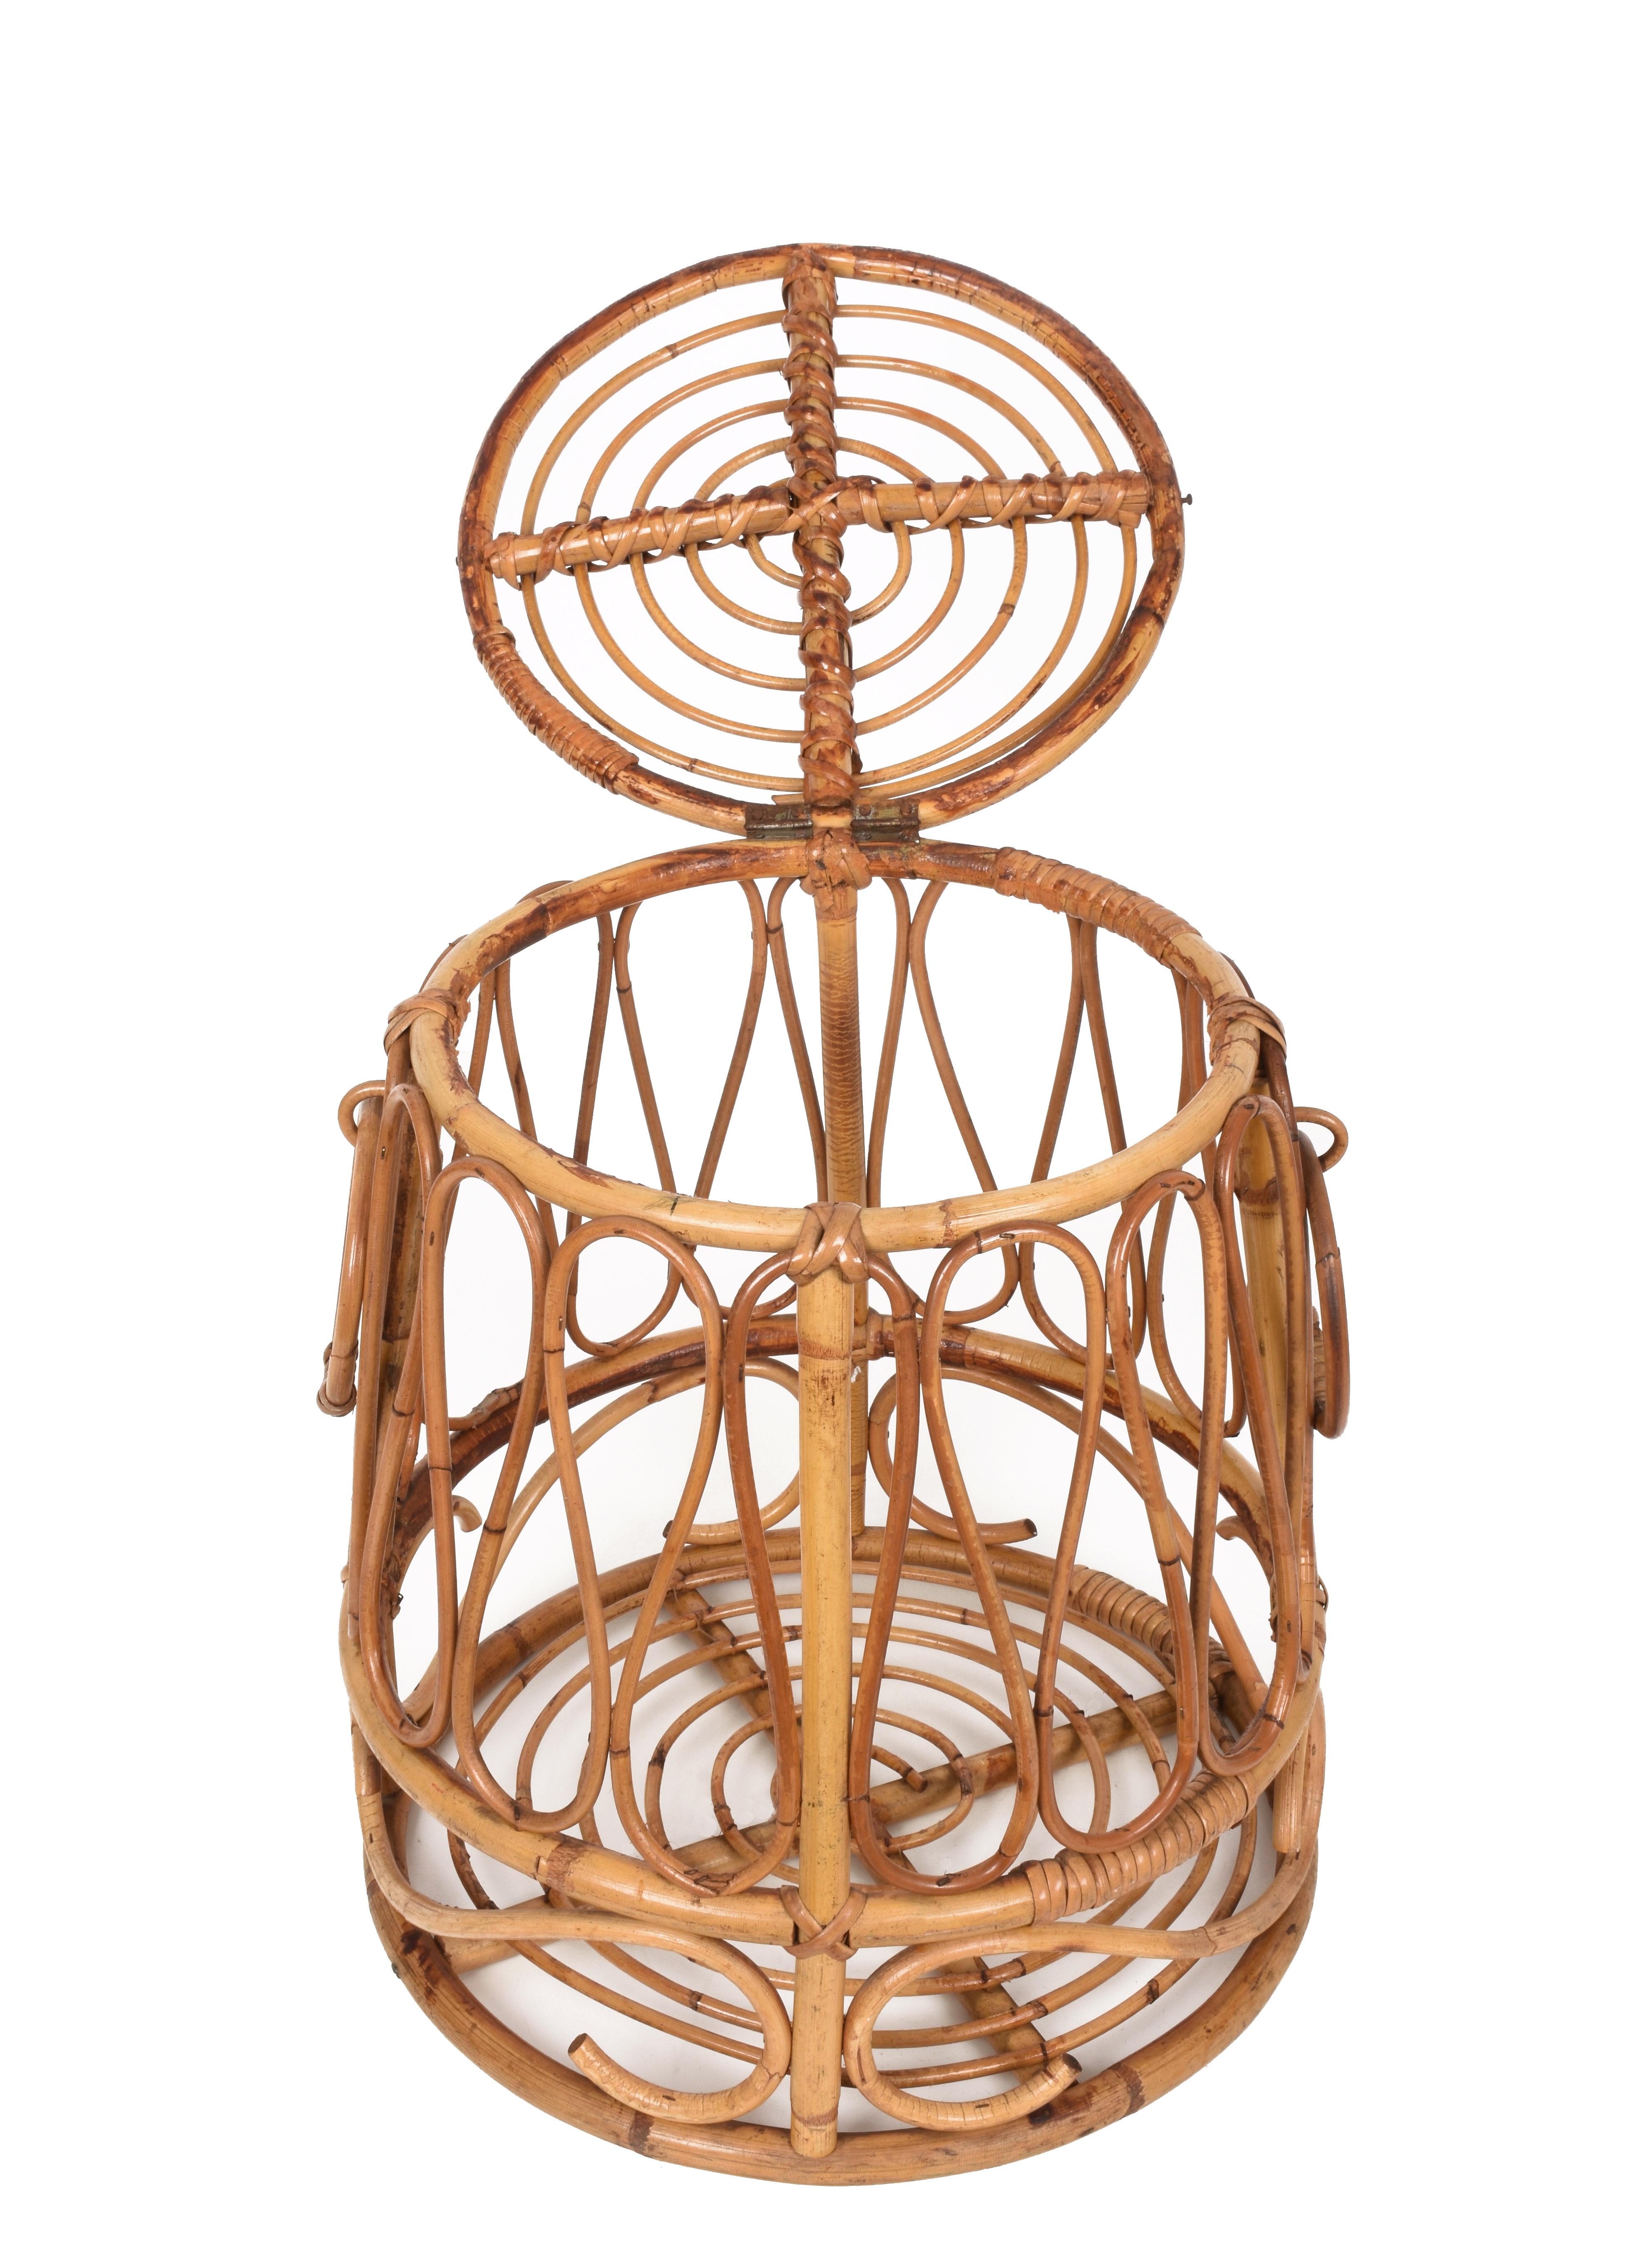 20th Century Mediterranean Midcentury Bamboo and Rattan Round Decorative Basket, Italy, 1950s